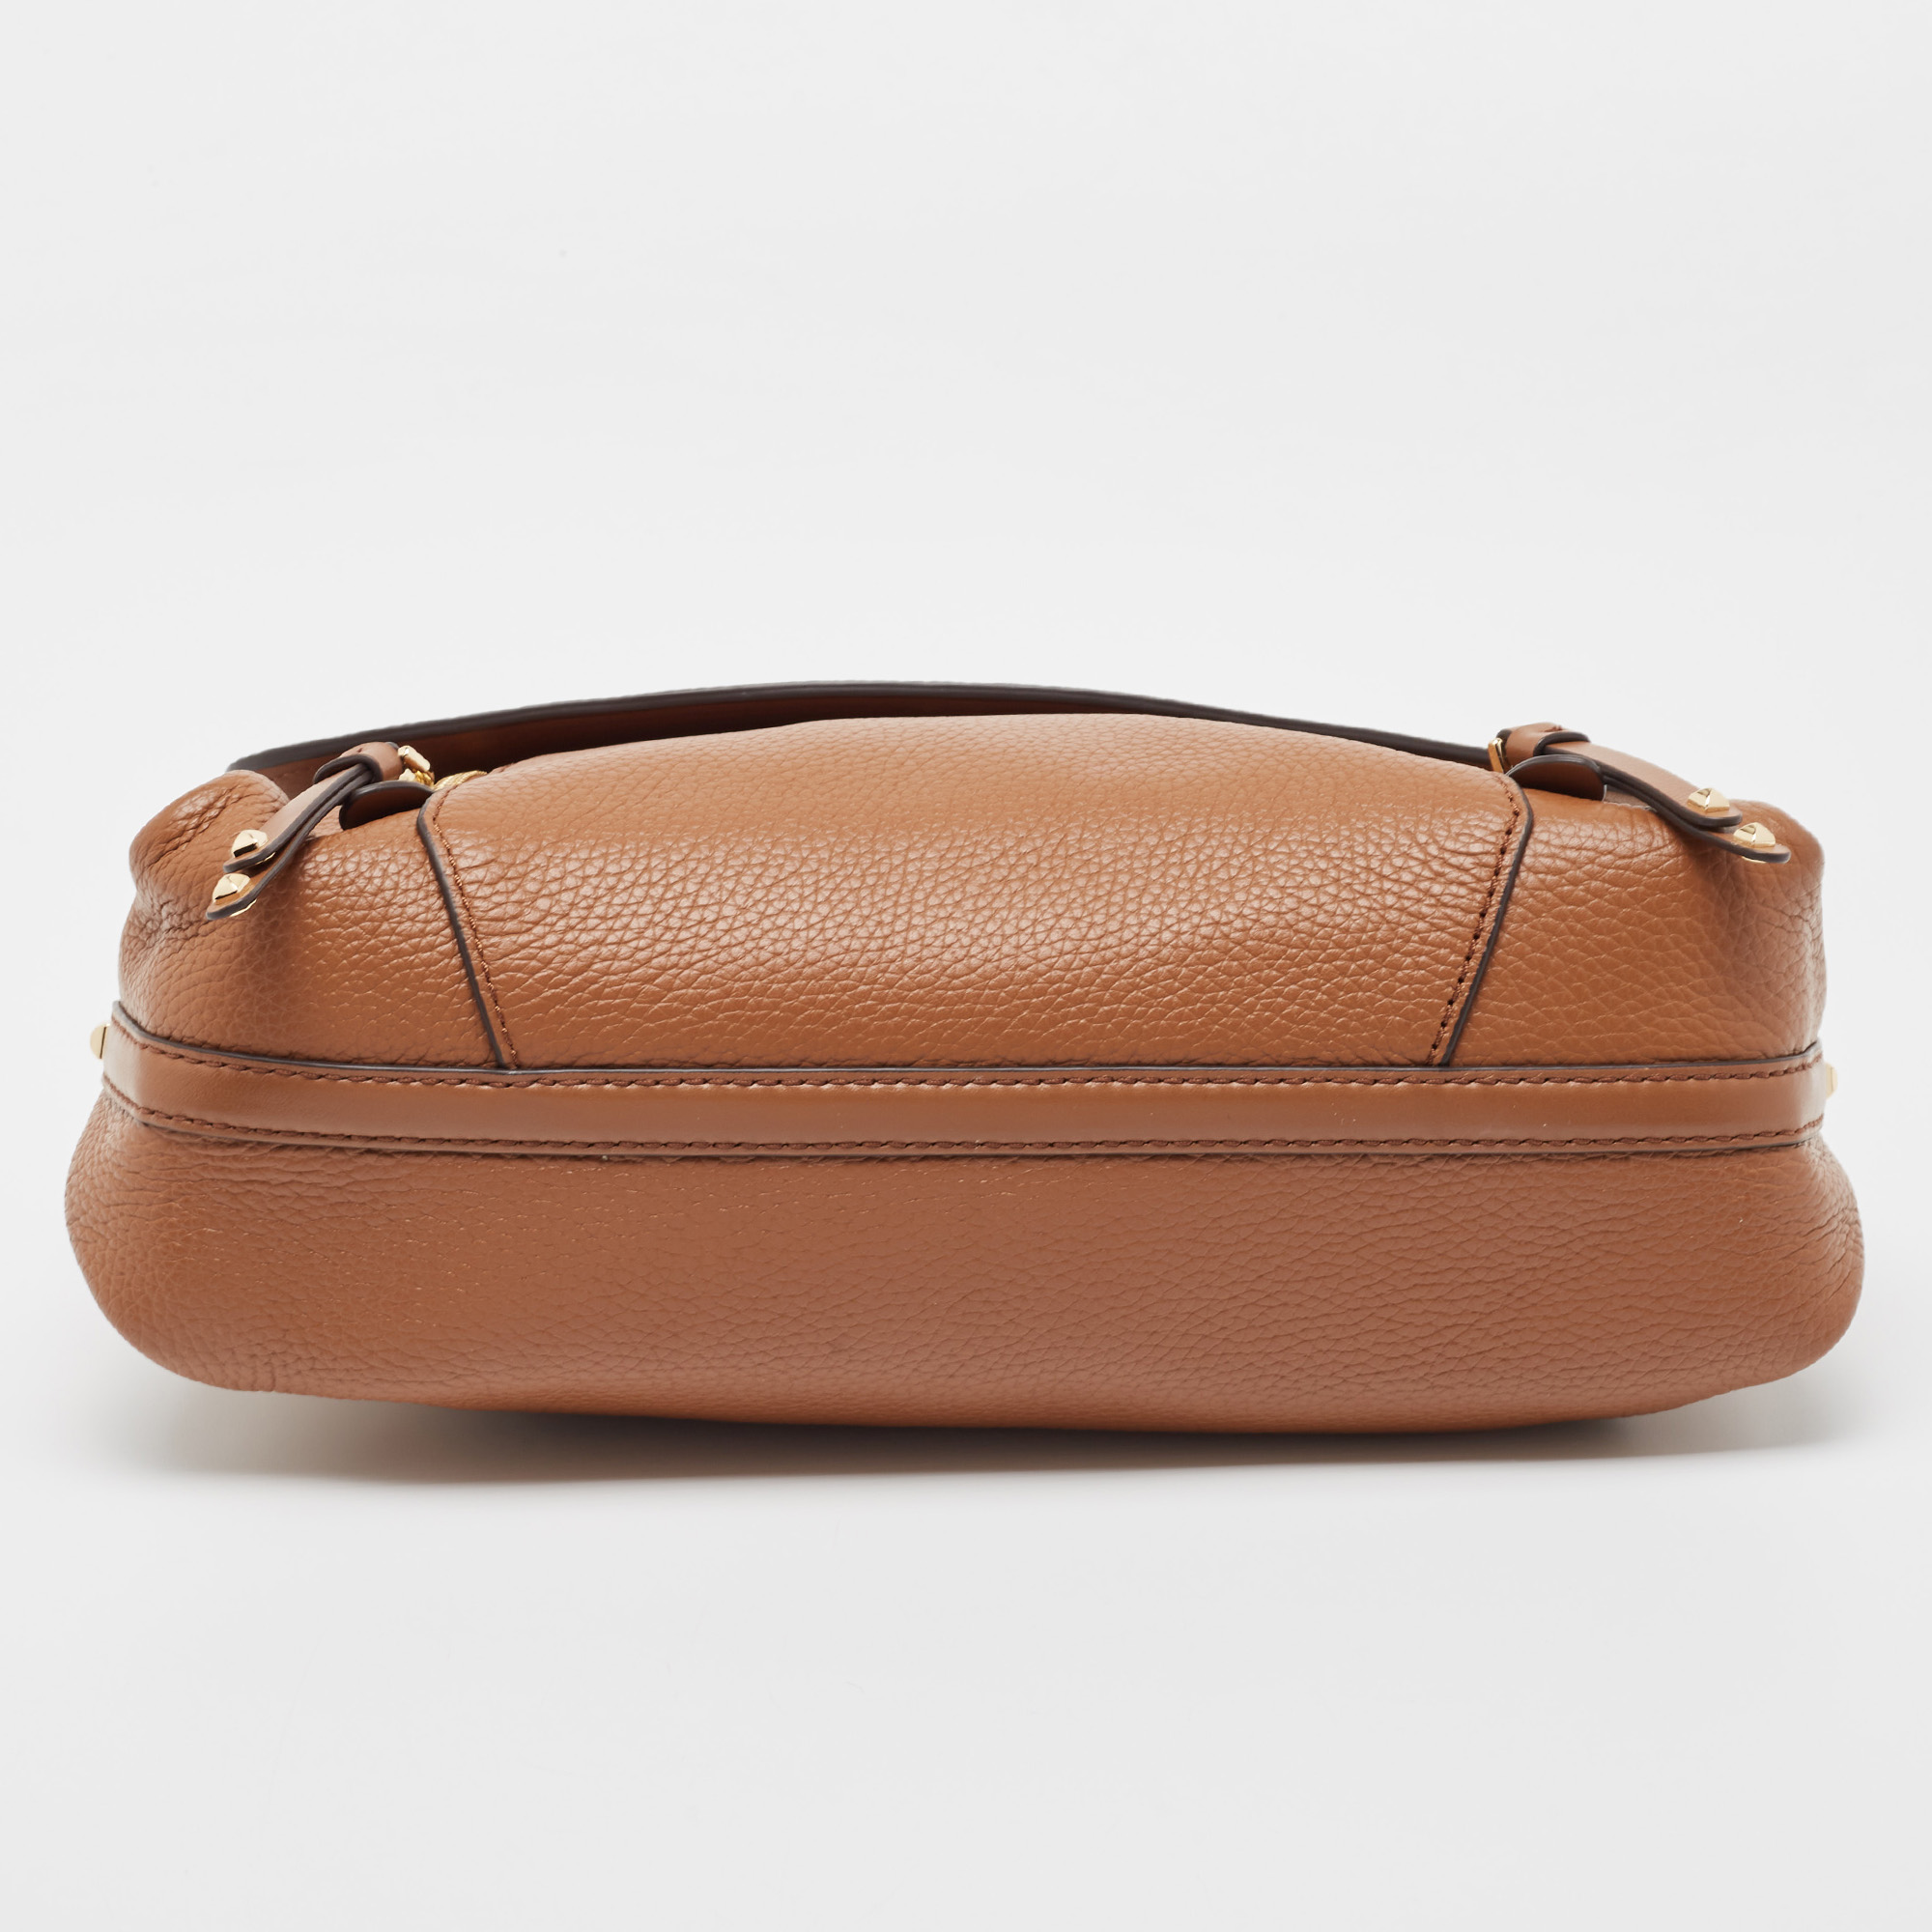 Michael Kors Brown Leather Medium Brooklyn Top Handle Bag